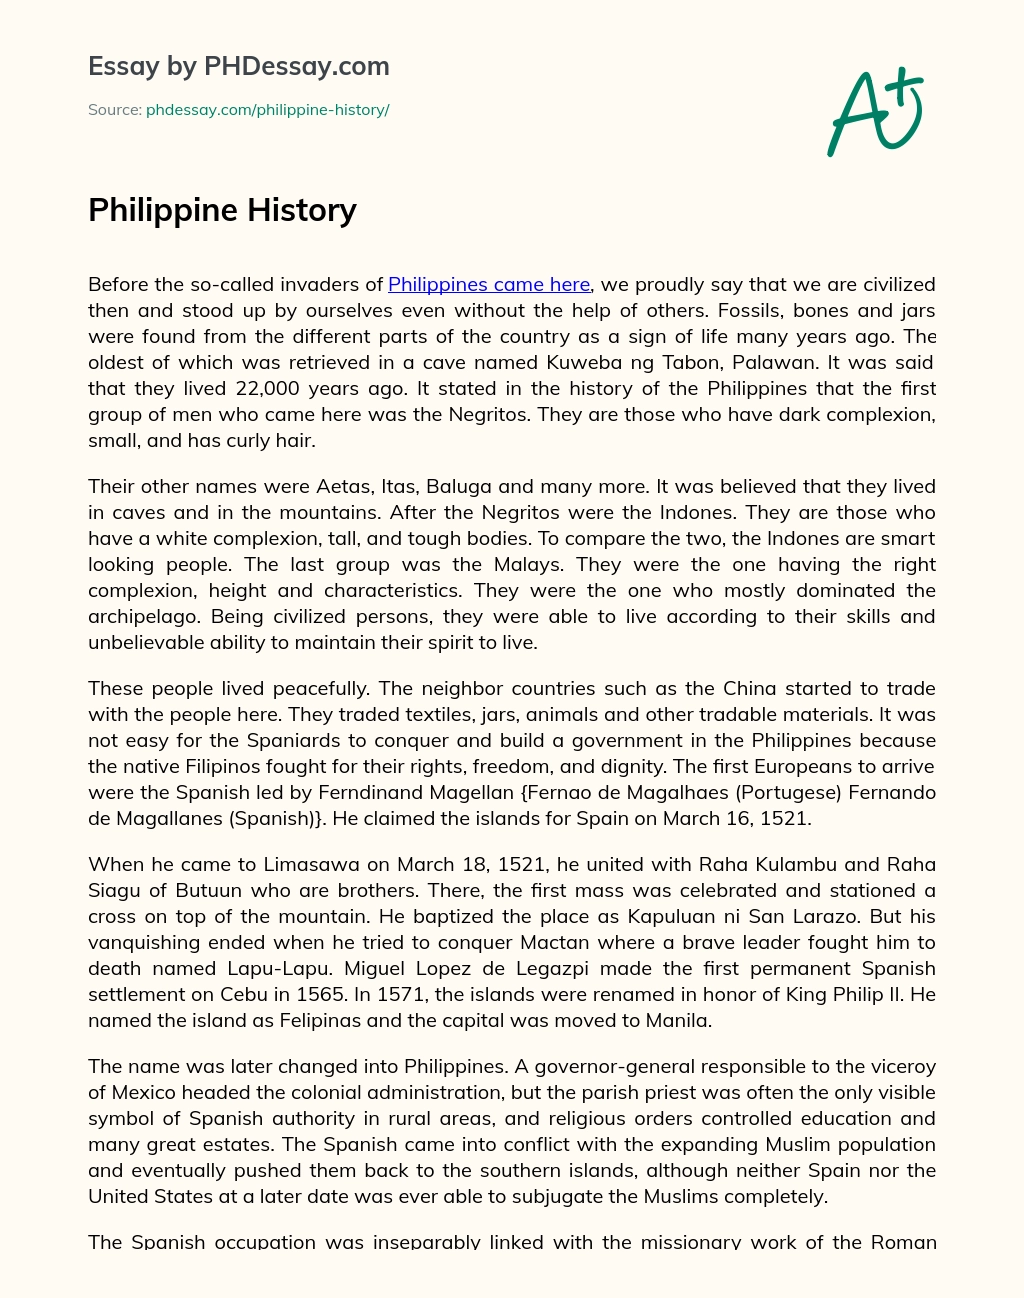 Philippine History essay